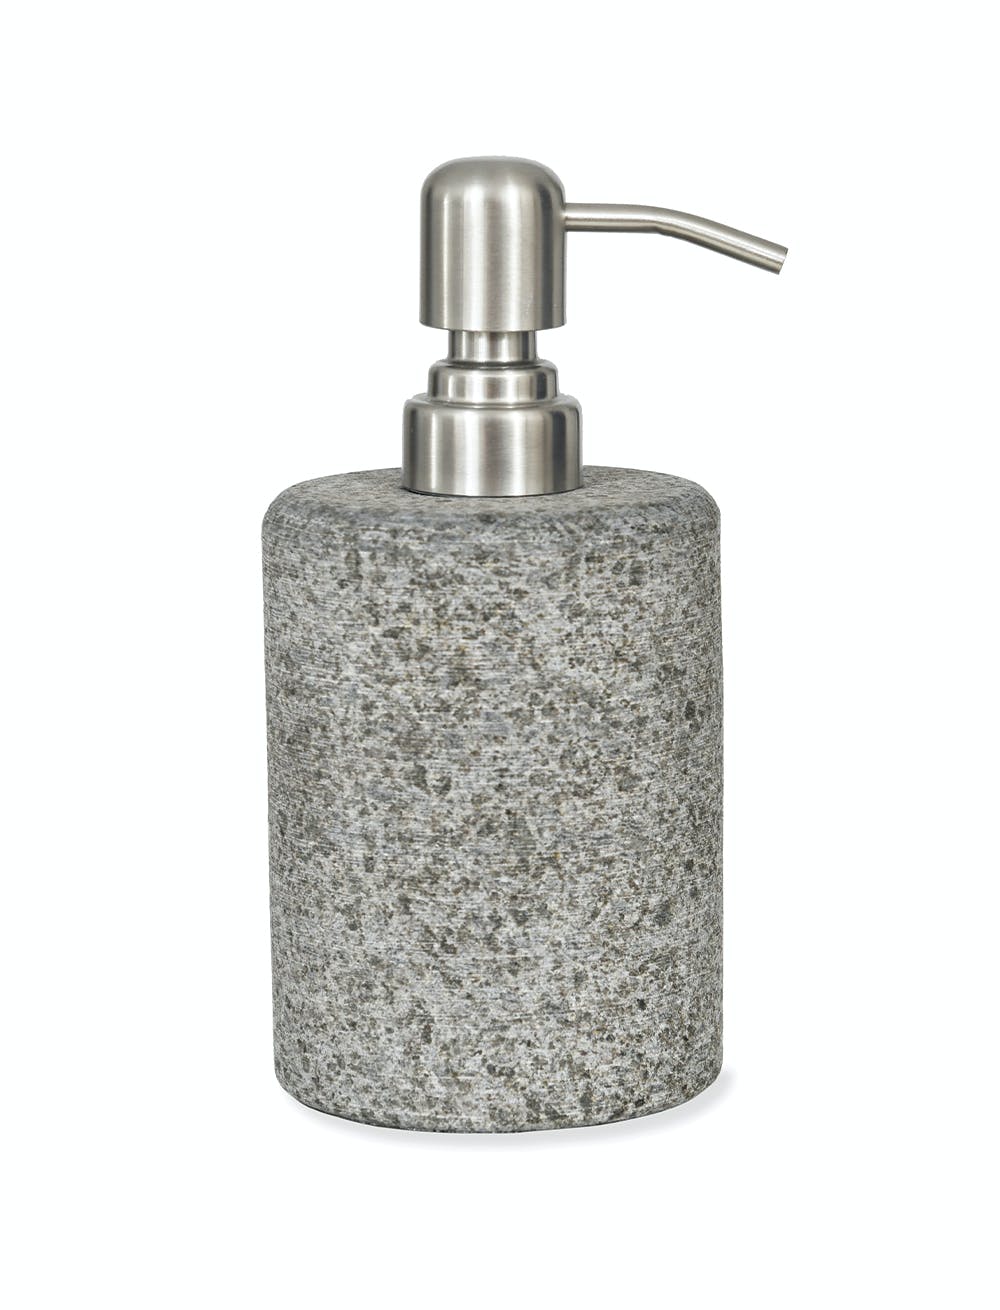 Westcote Granite Soap Dispenser